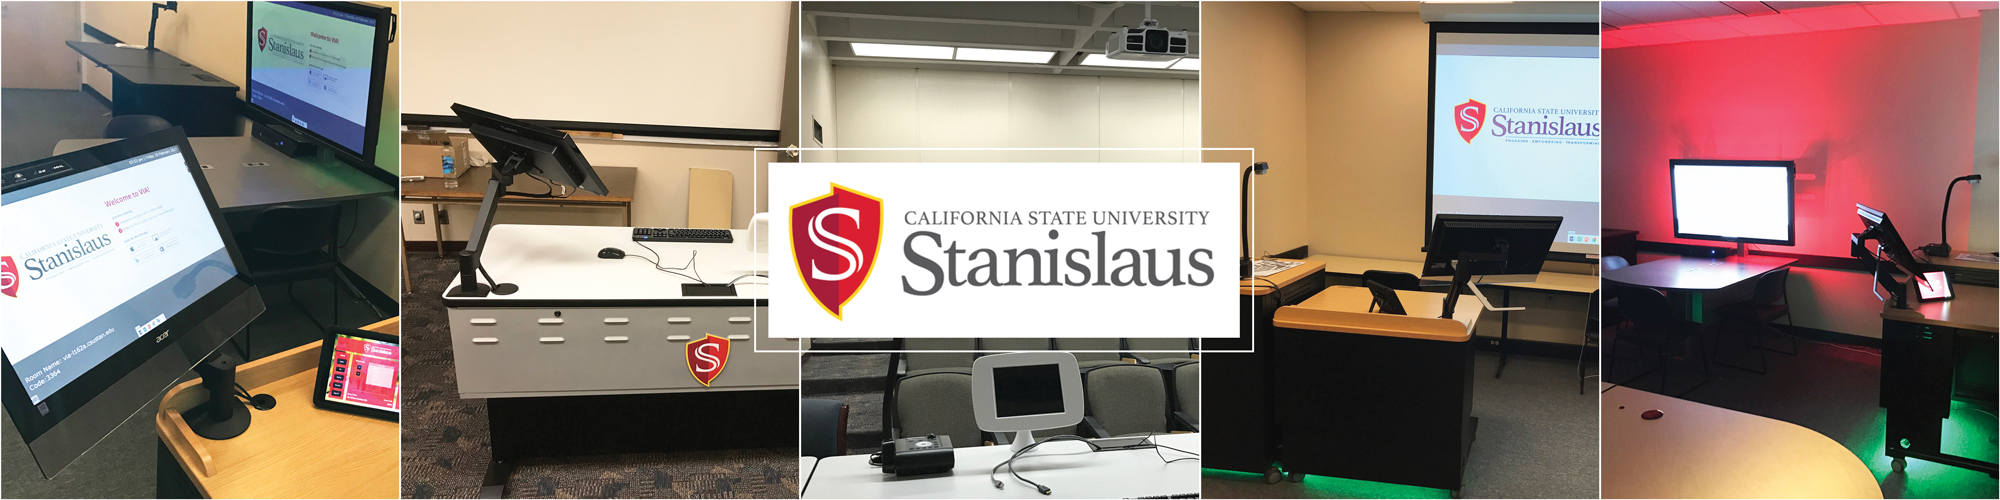  California State University Stanislaus